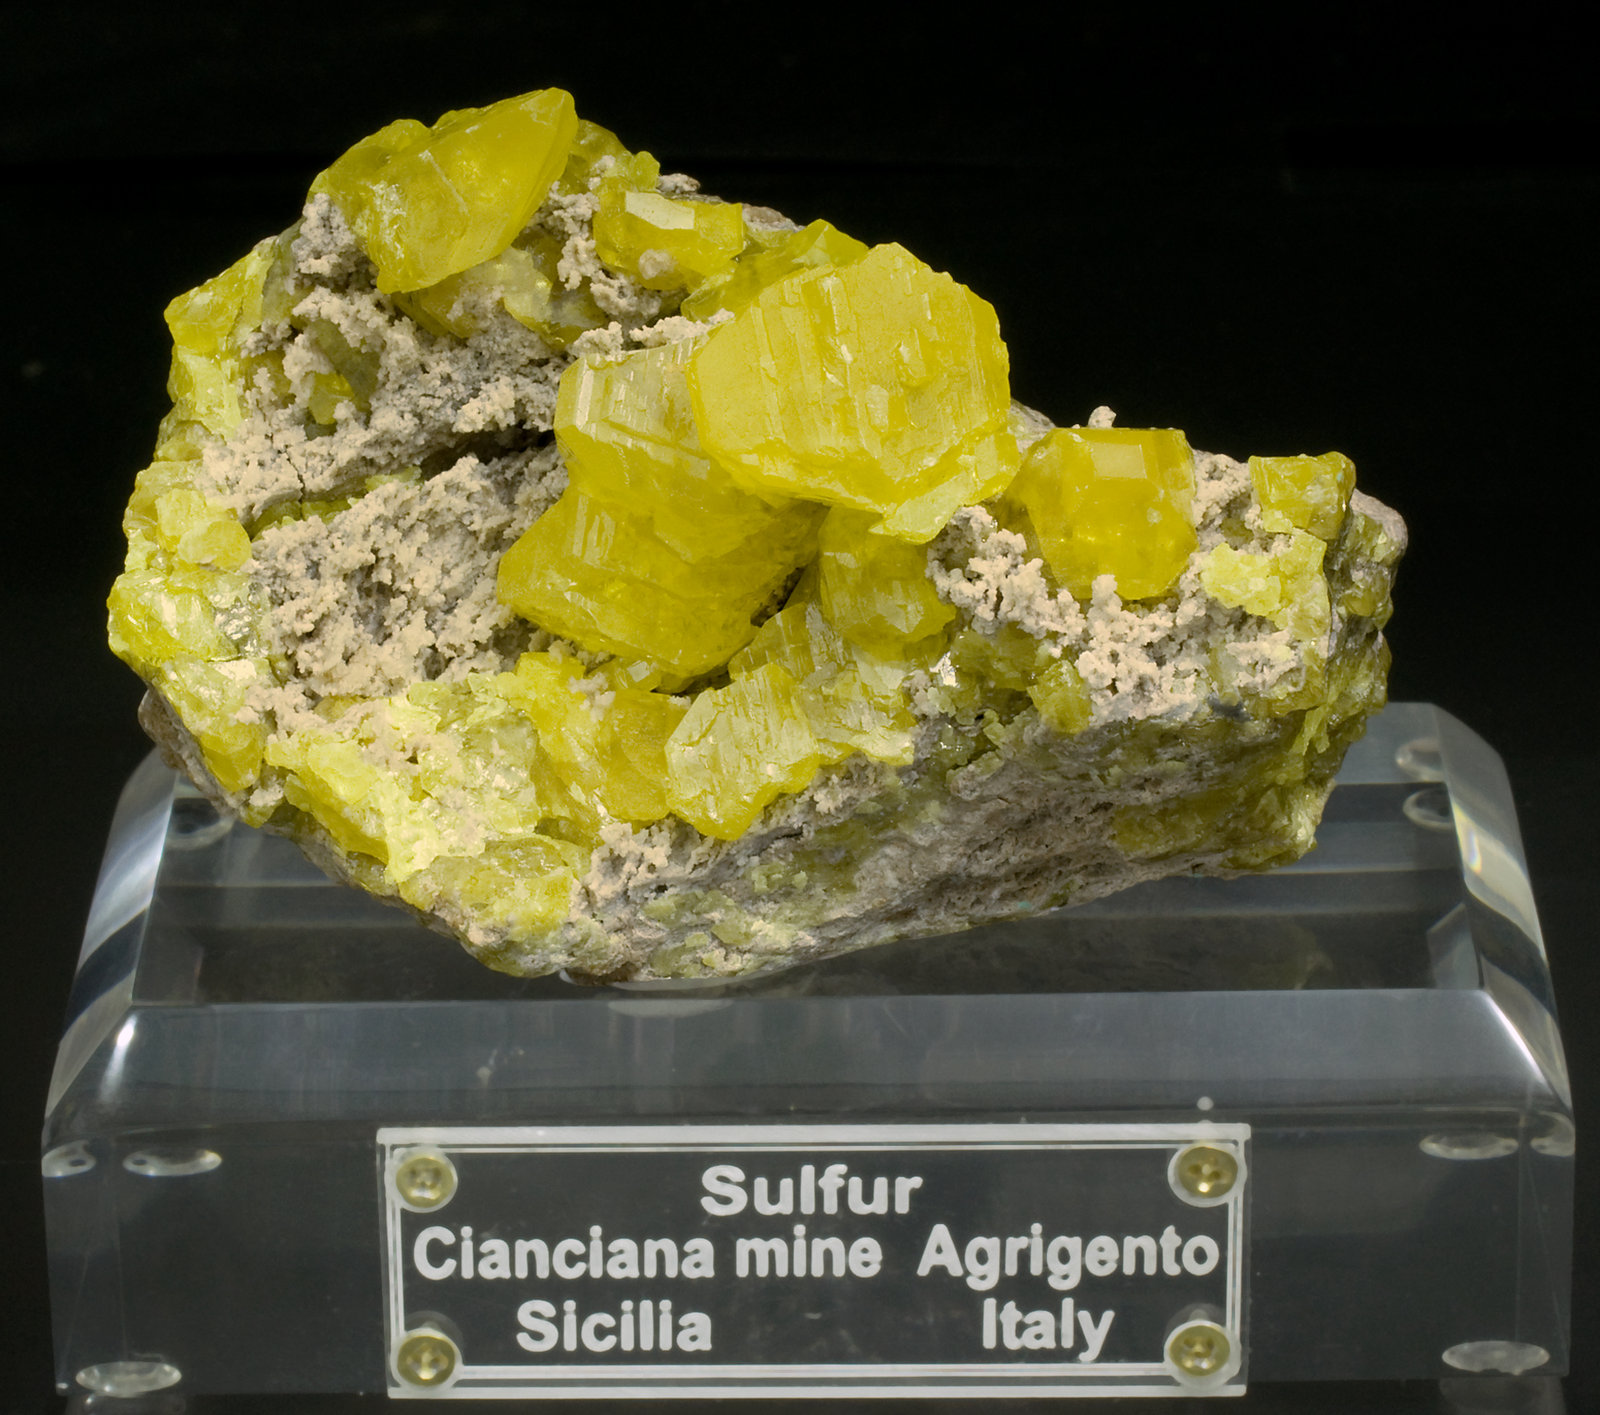 specimens/s_imagesP9/Sulfur-AB79P9f.jpg